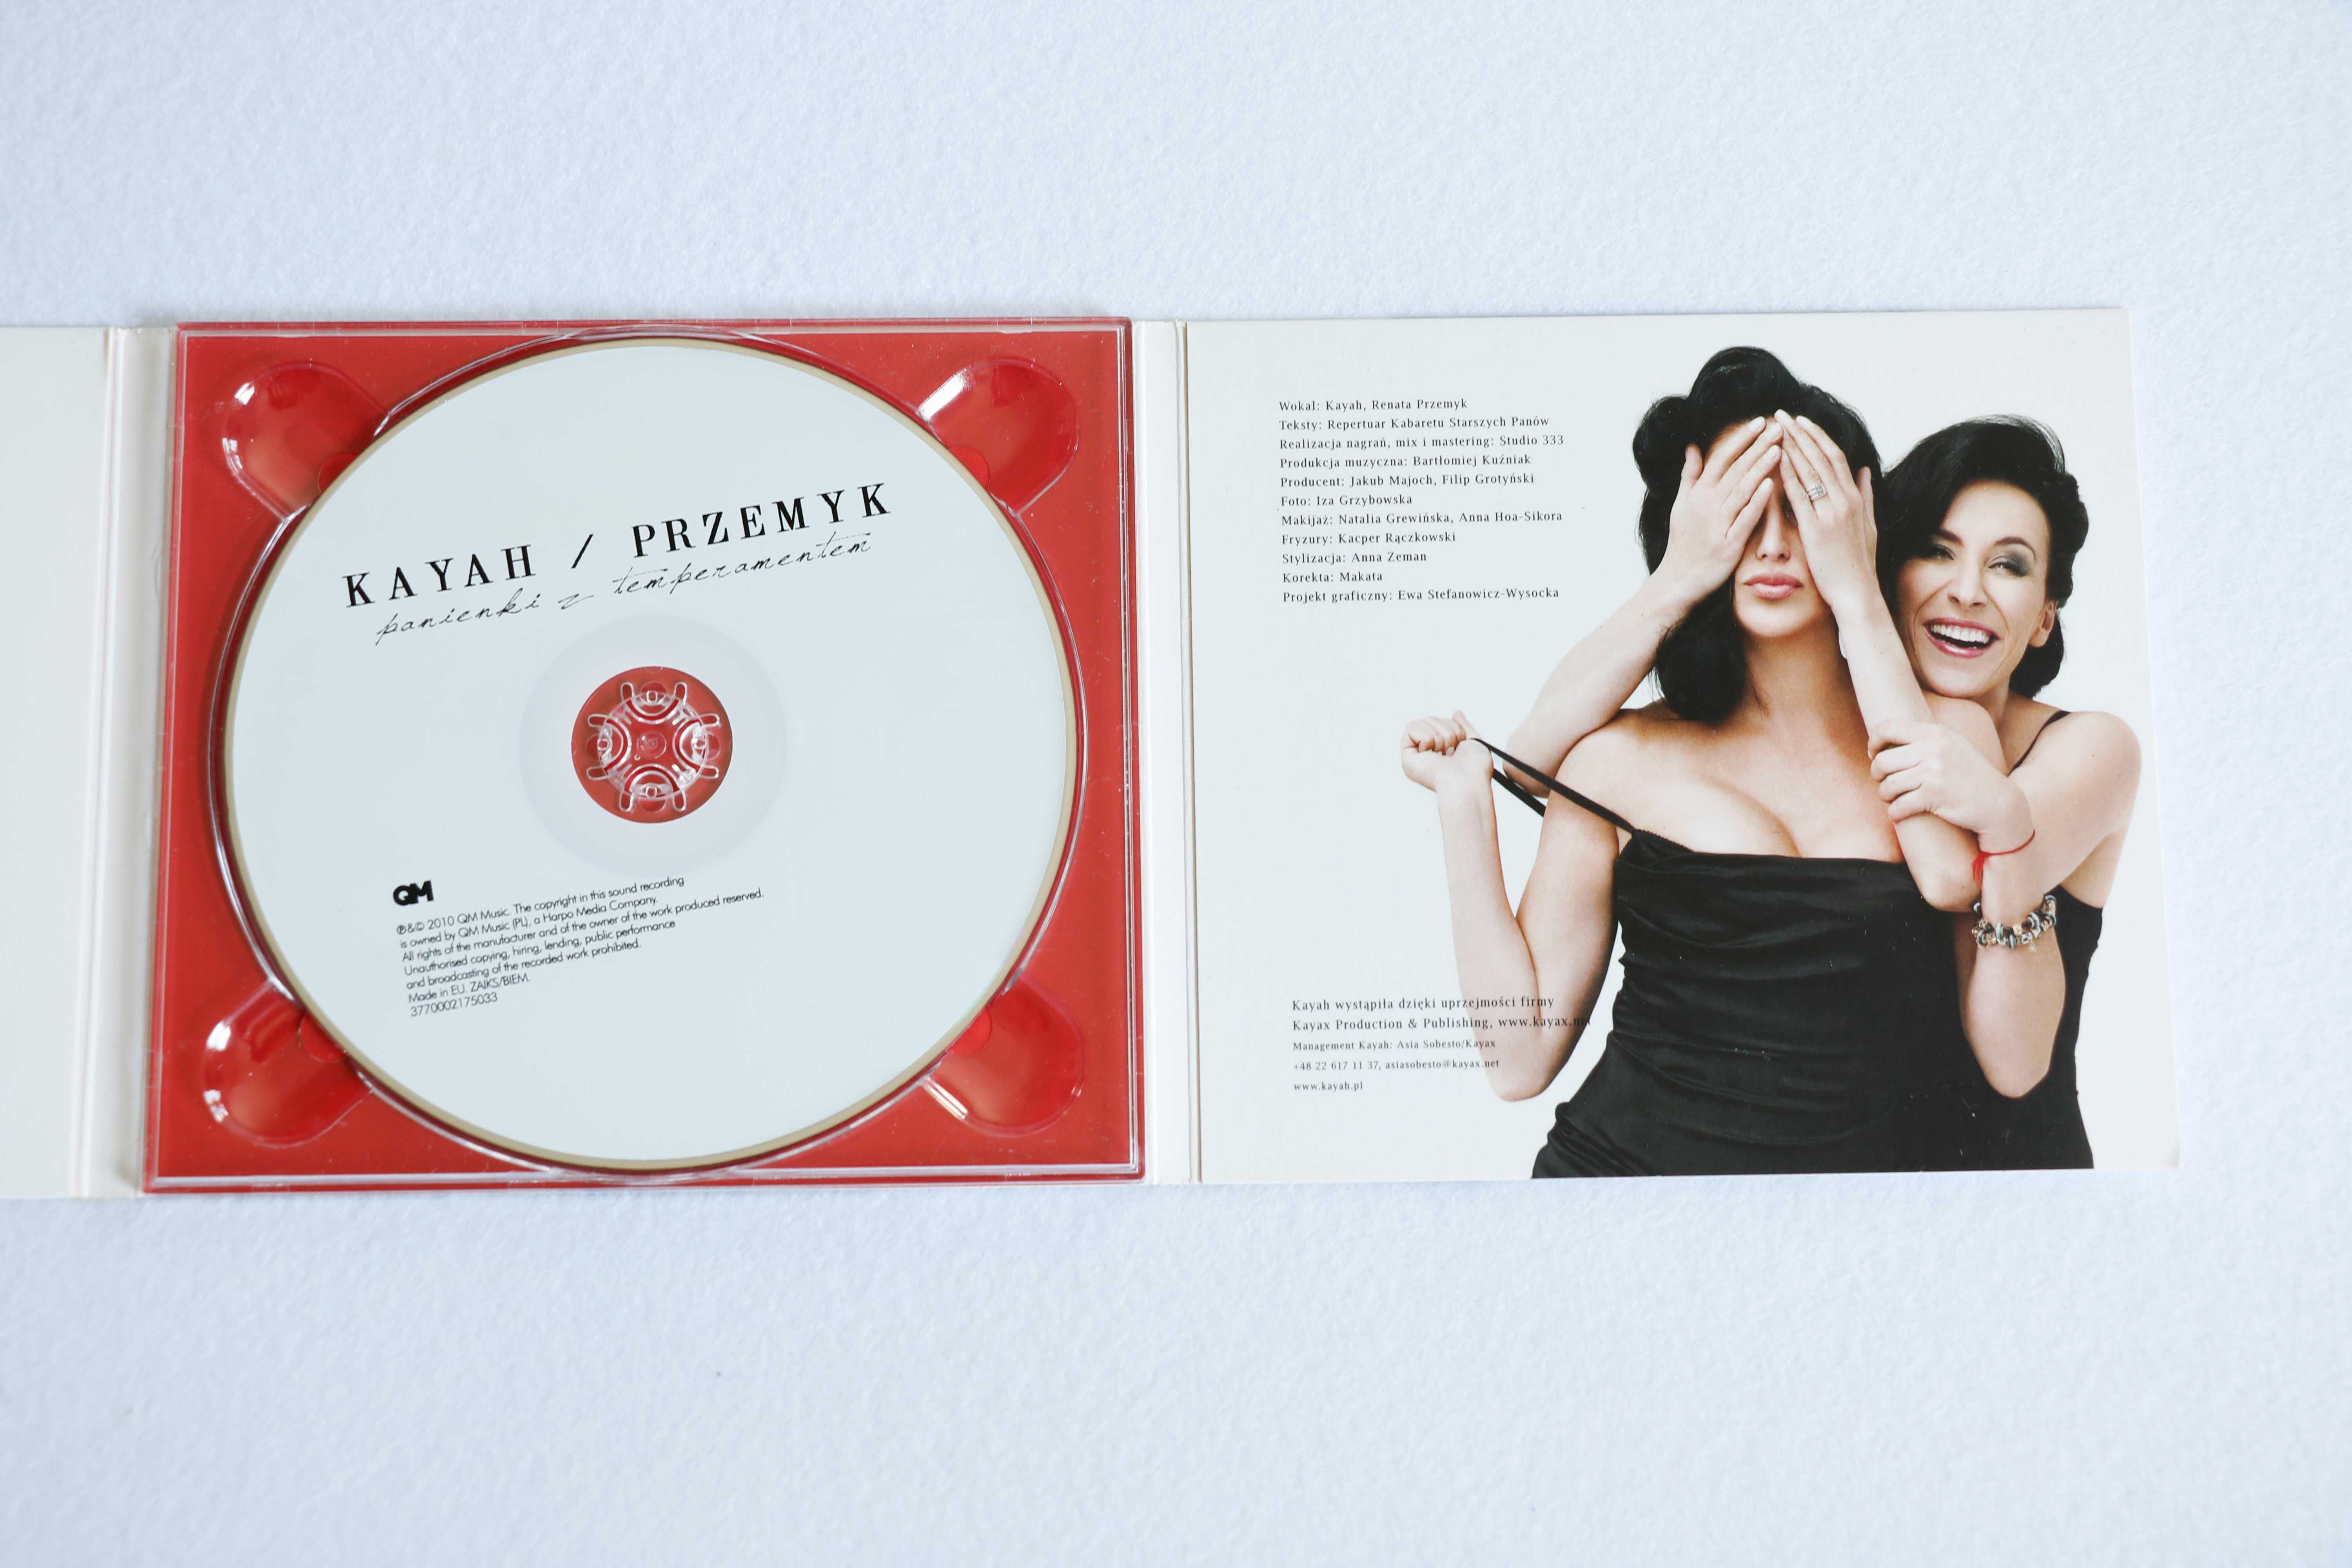 Kayah / Przemyk - panienki z temperamentem - CD